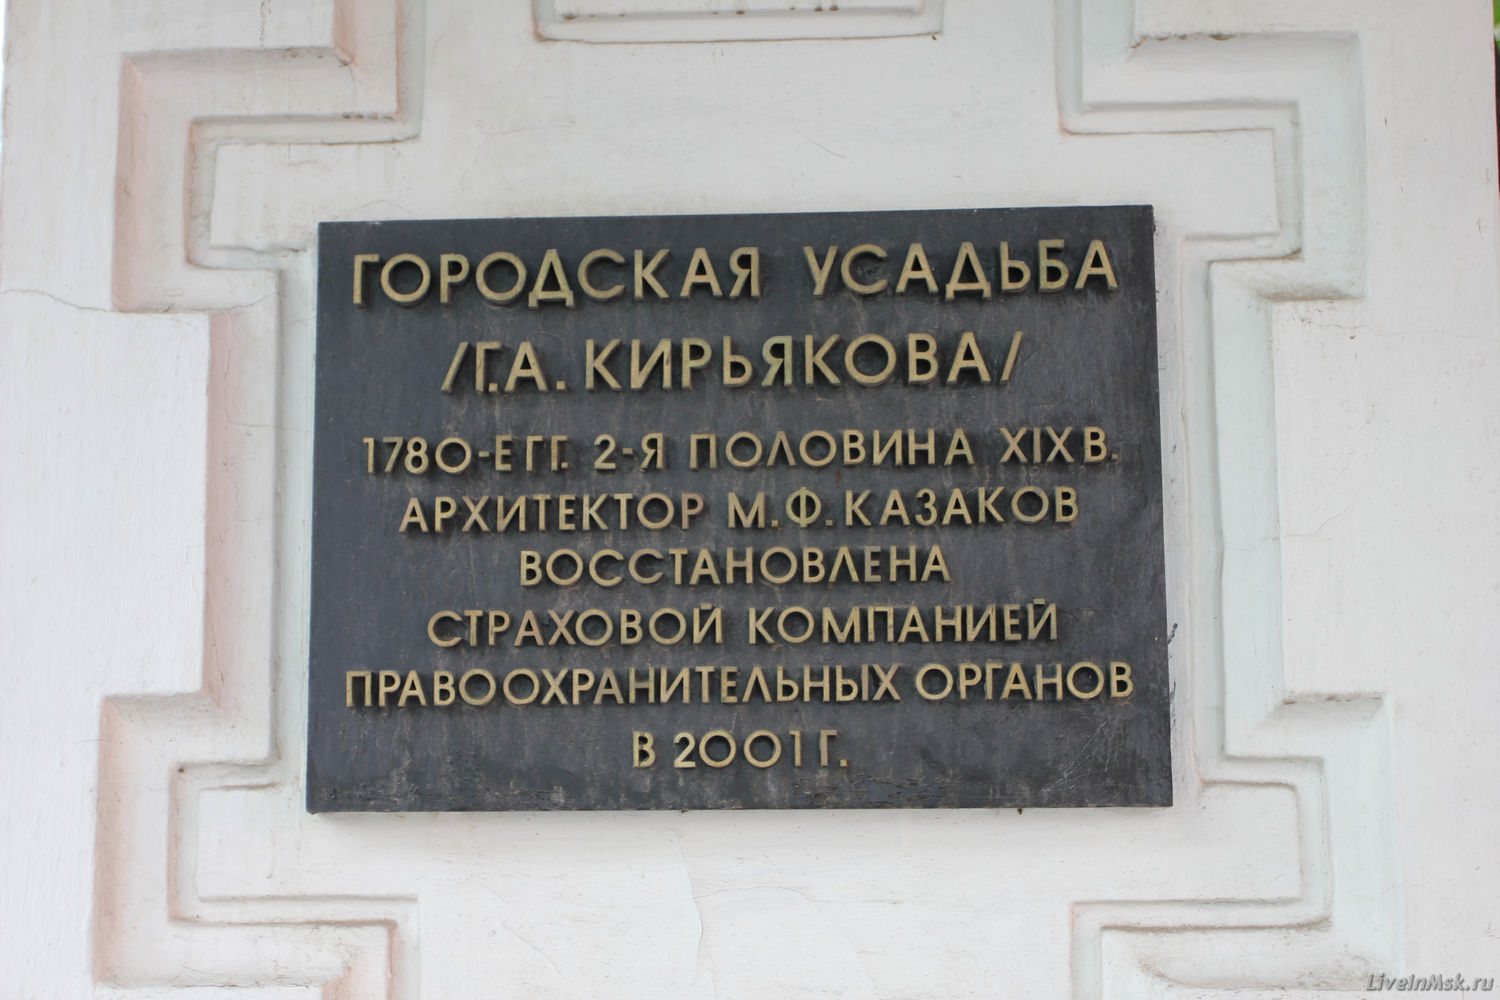 Усадьба купца Кирьякова, фото 2014 года